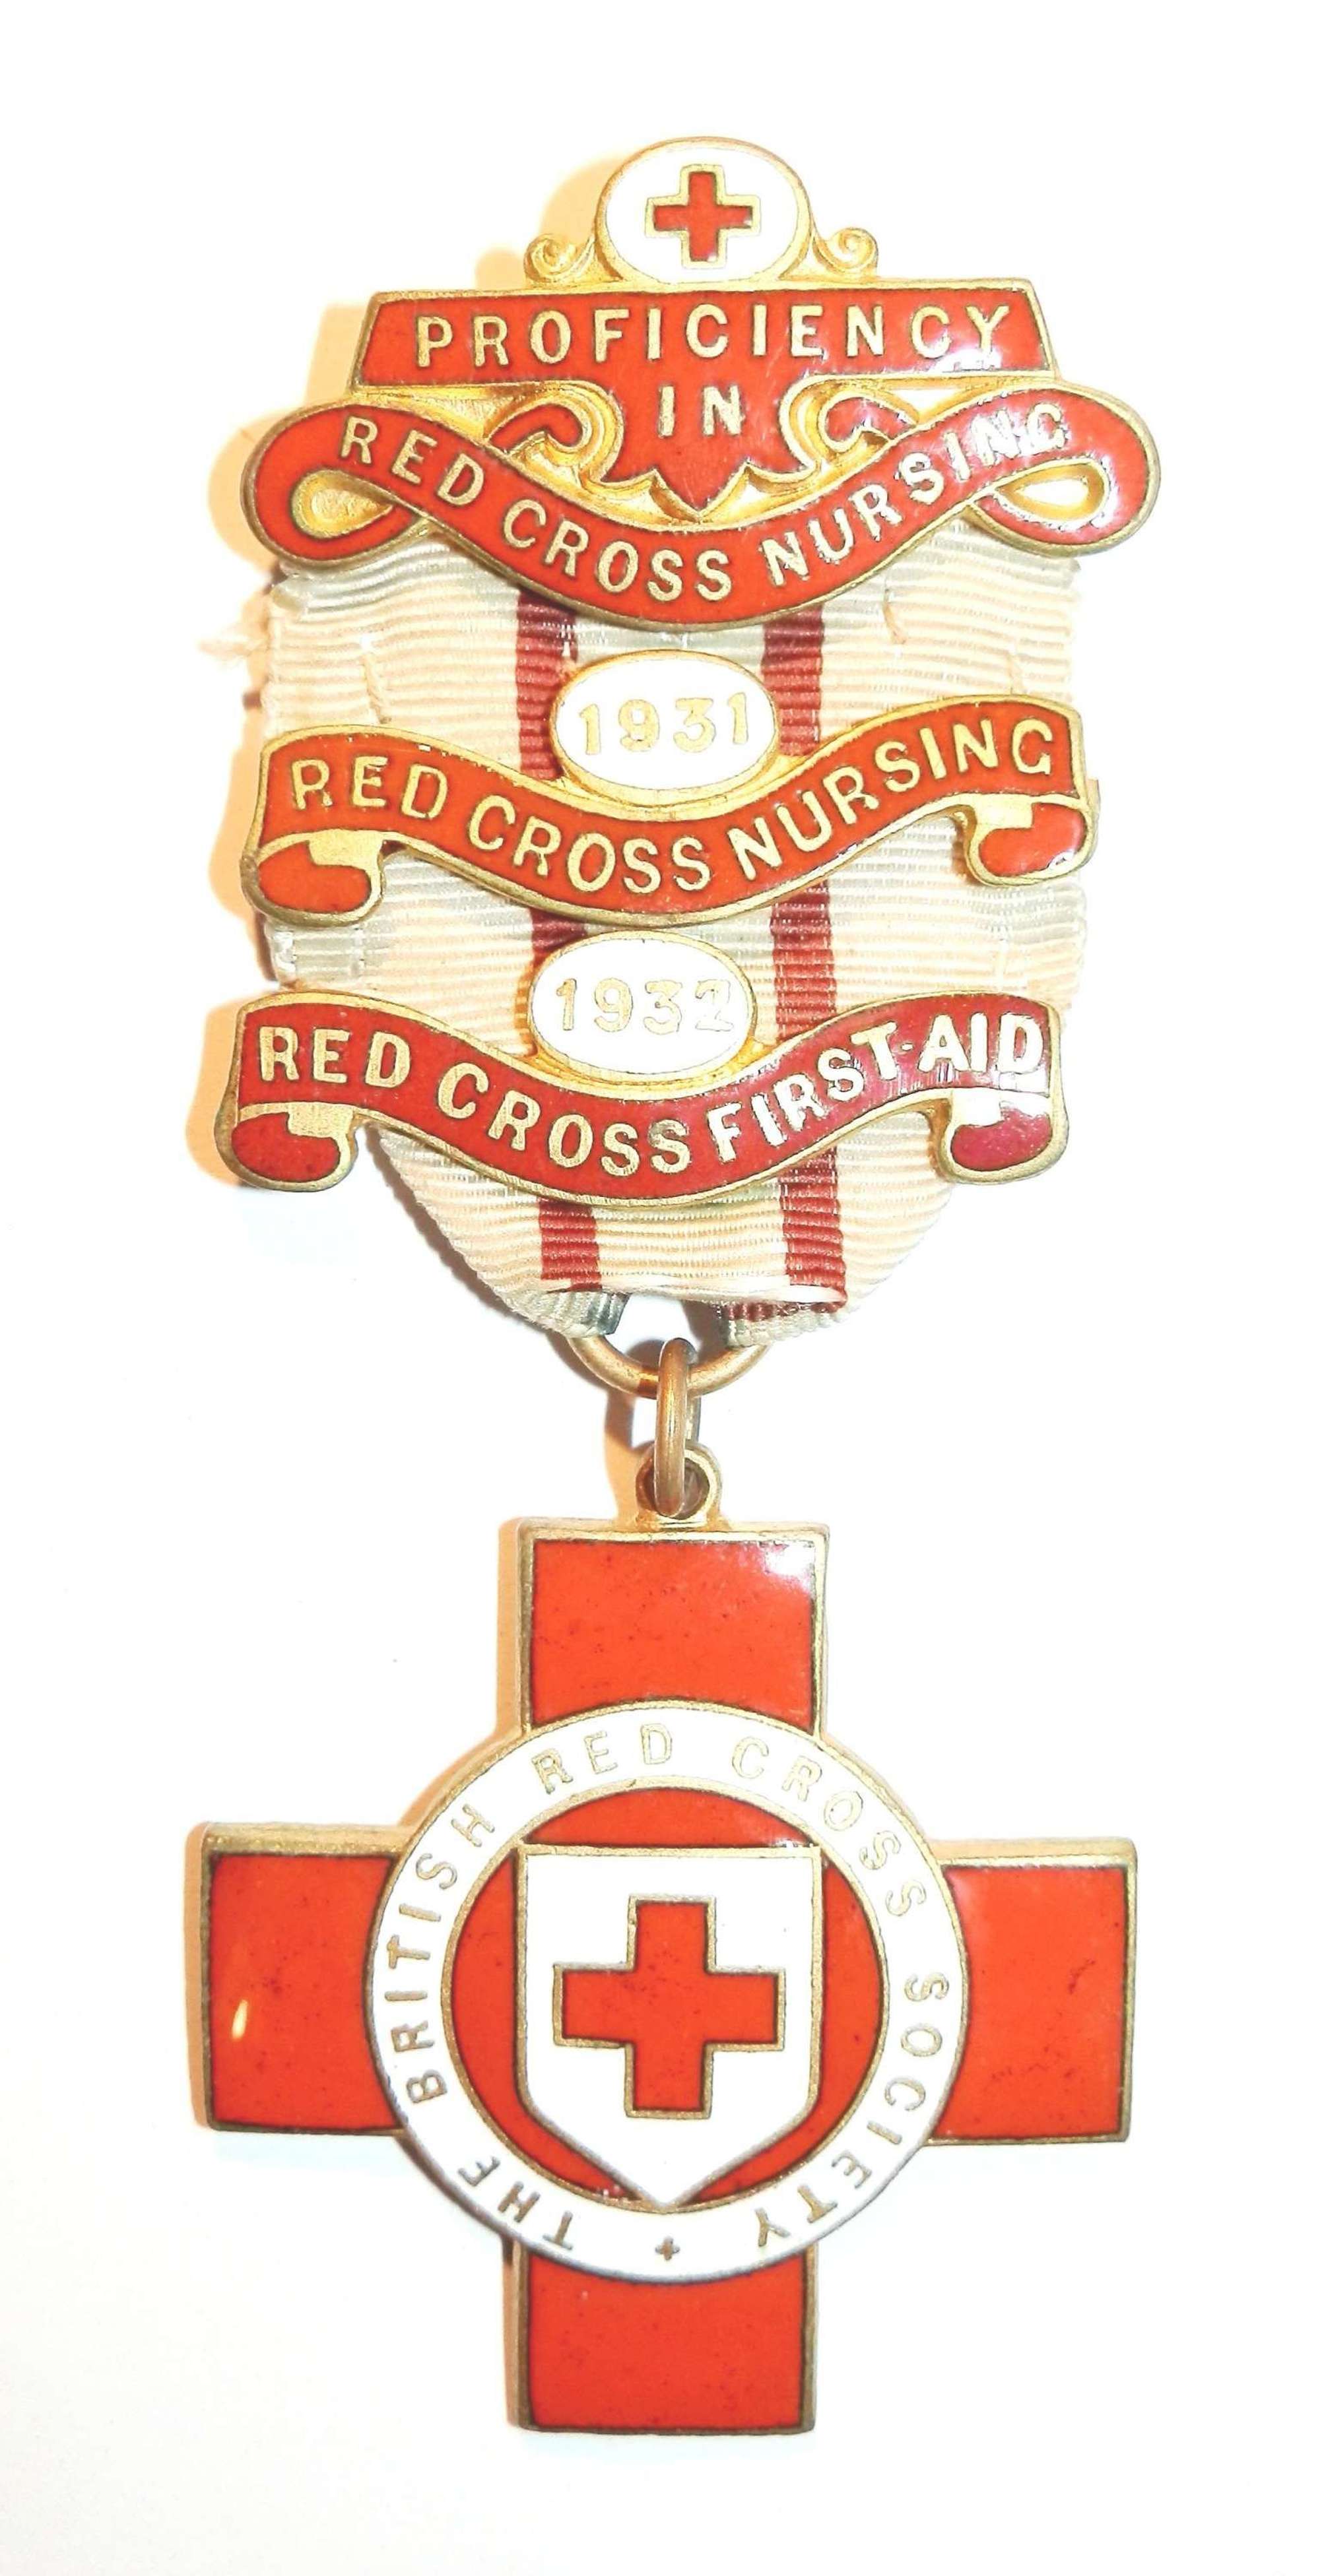 Proficiency in Red Cross Nursing Awarded to C. Stewart.